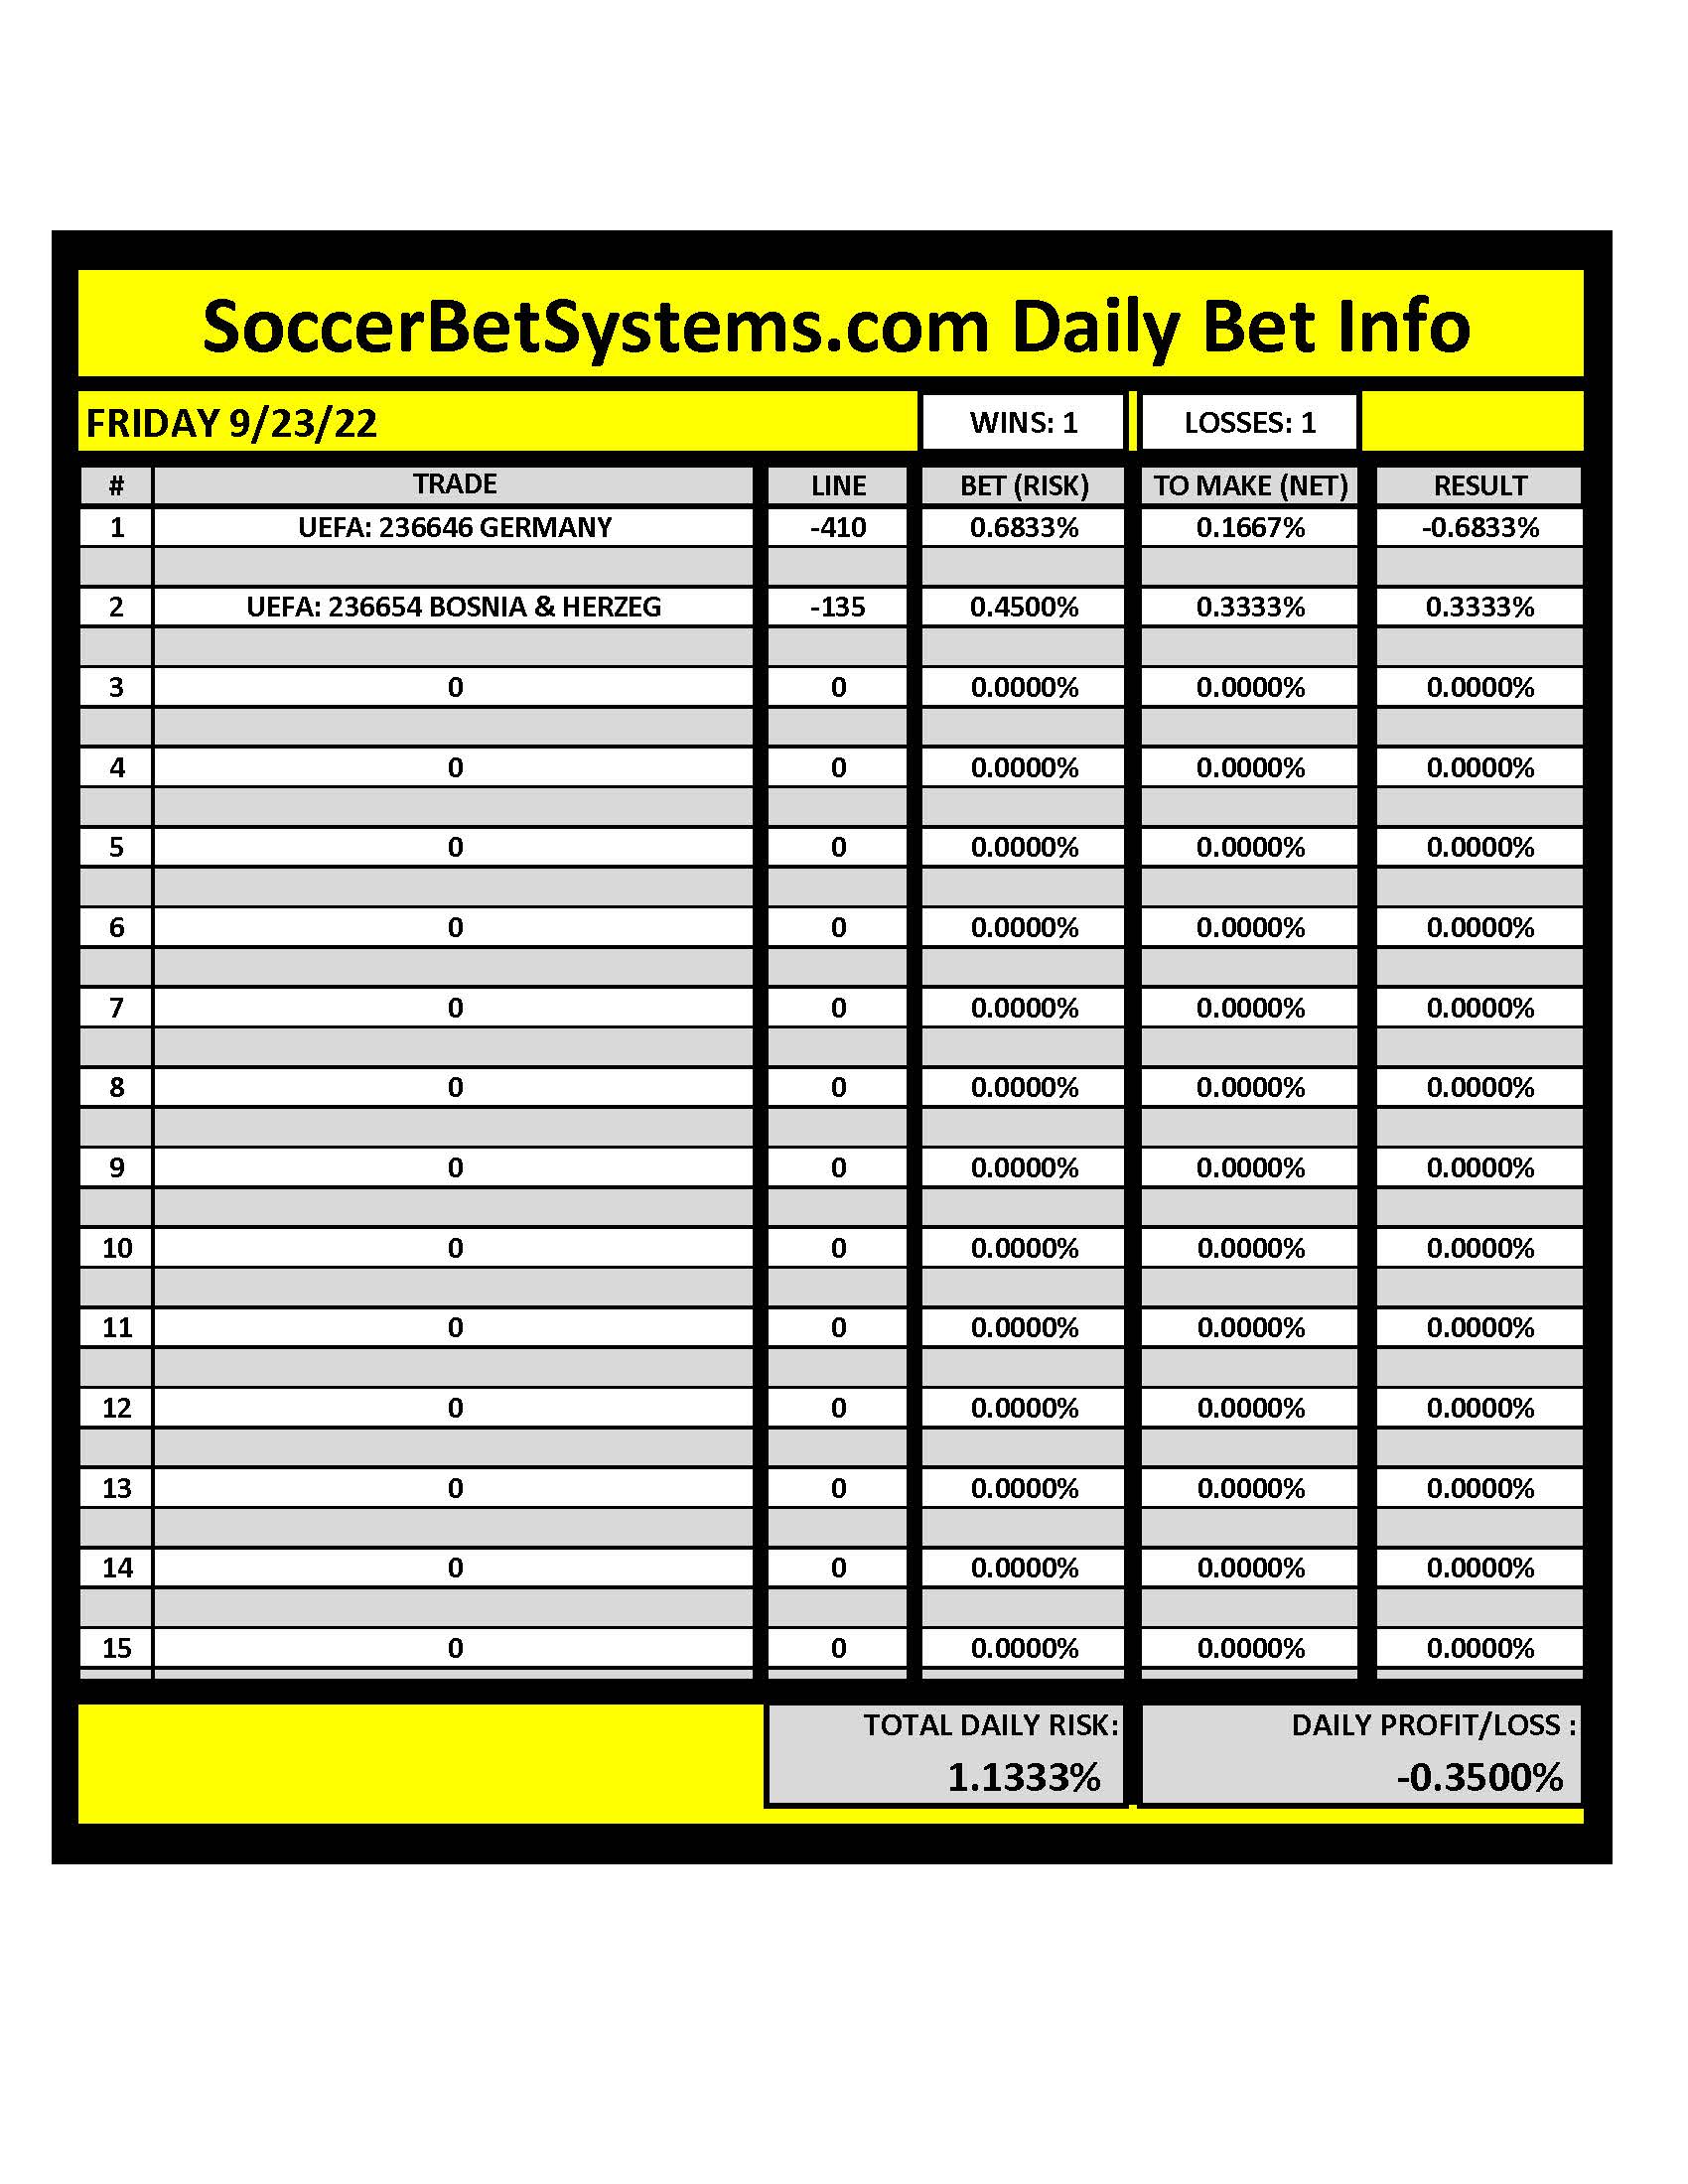 SoccerBetSystems.com 9/23/22 Daily Results